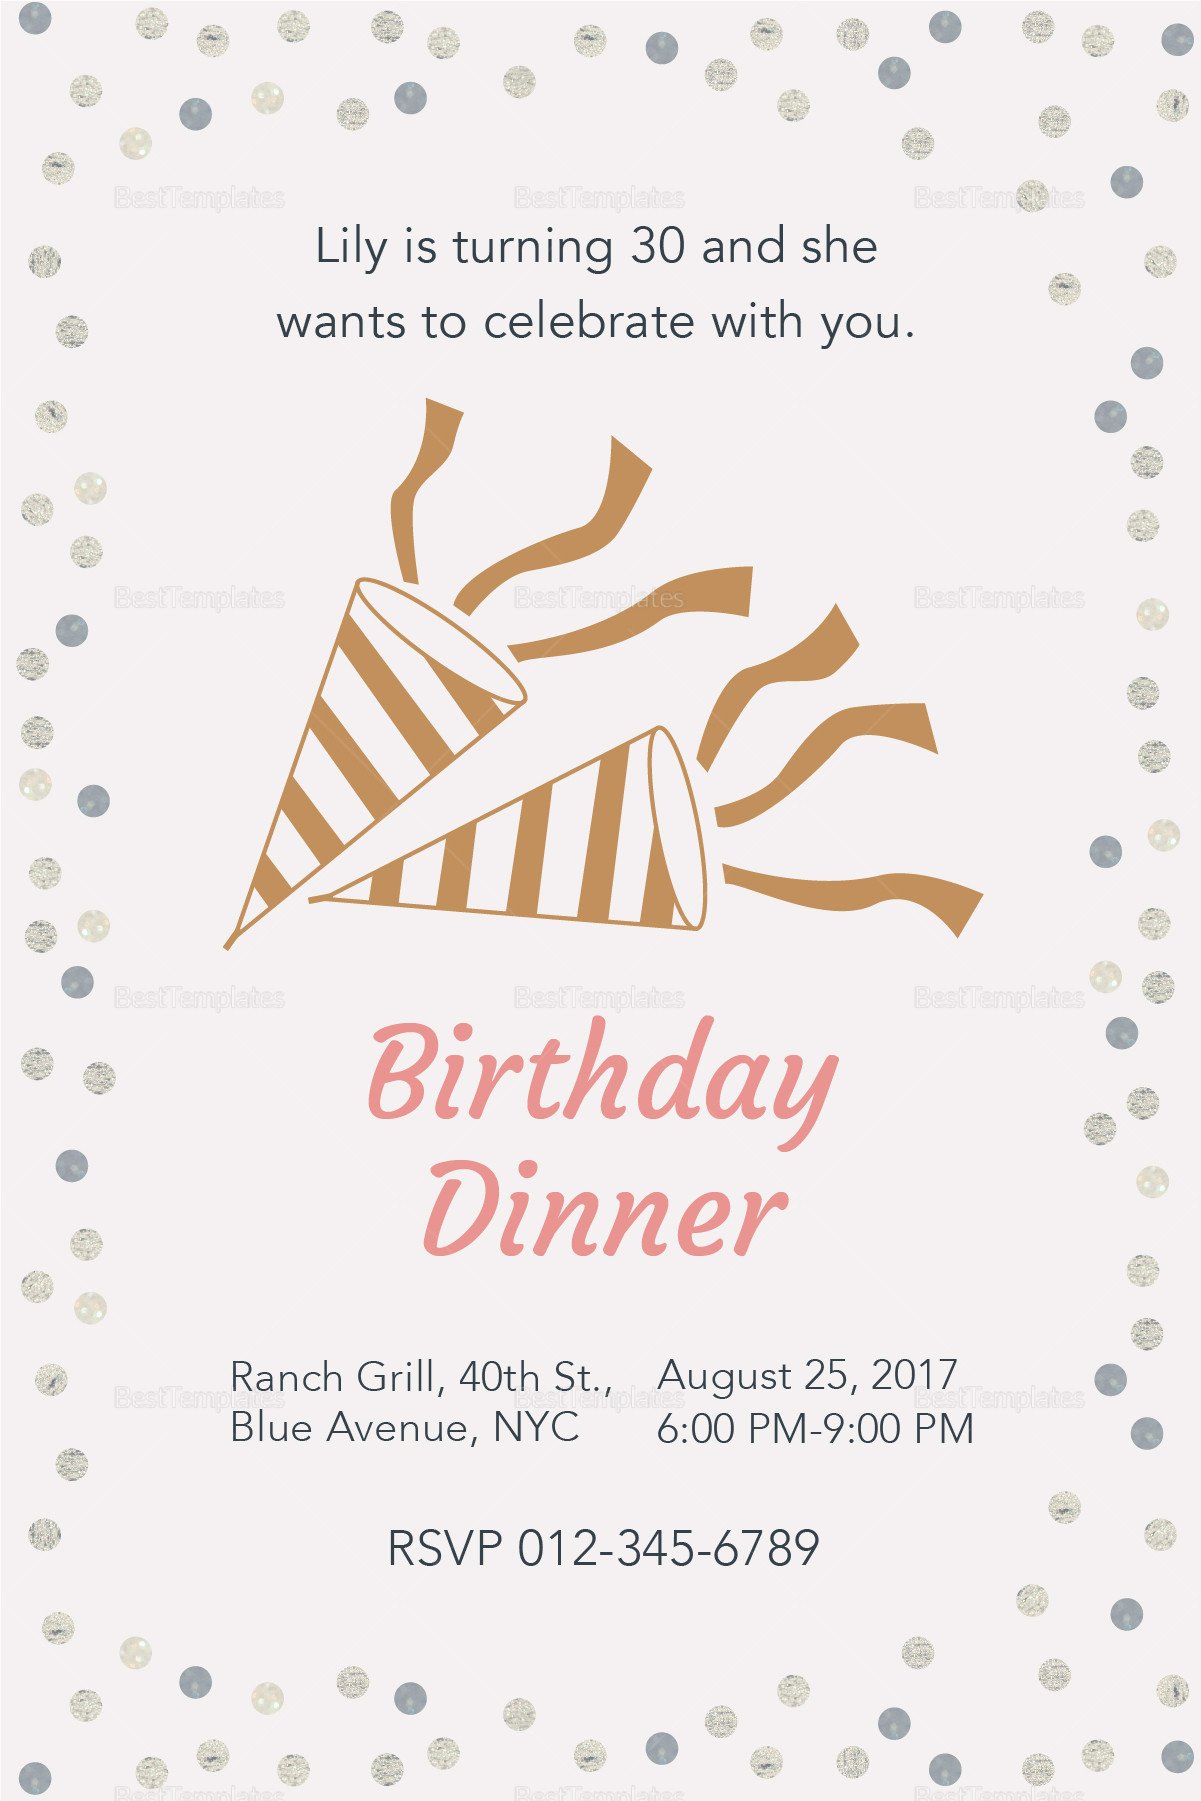 Birthday Dinner Invitation Design Template in PSD Word